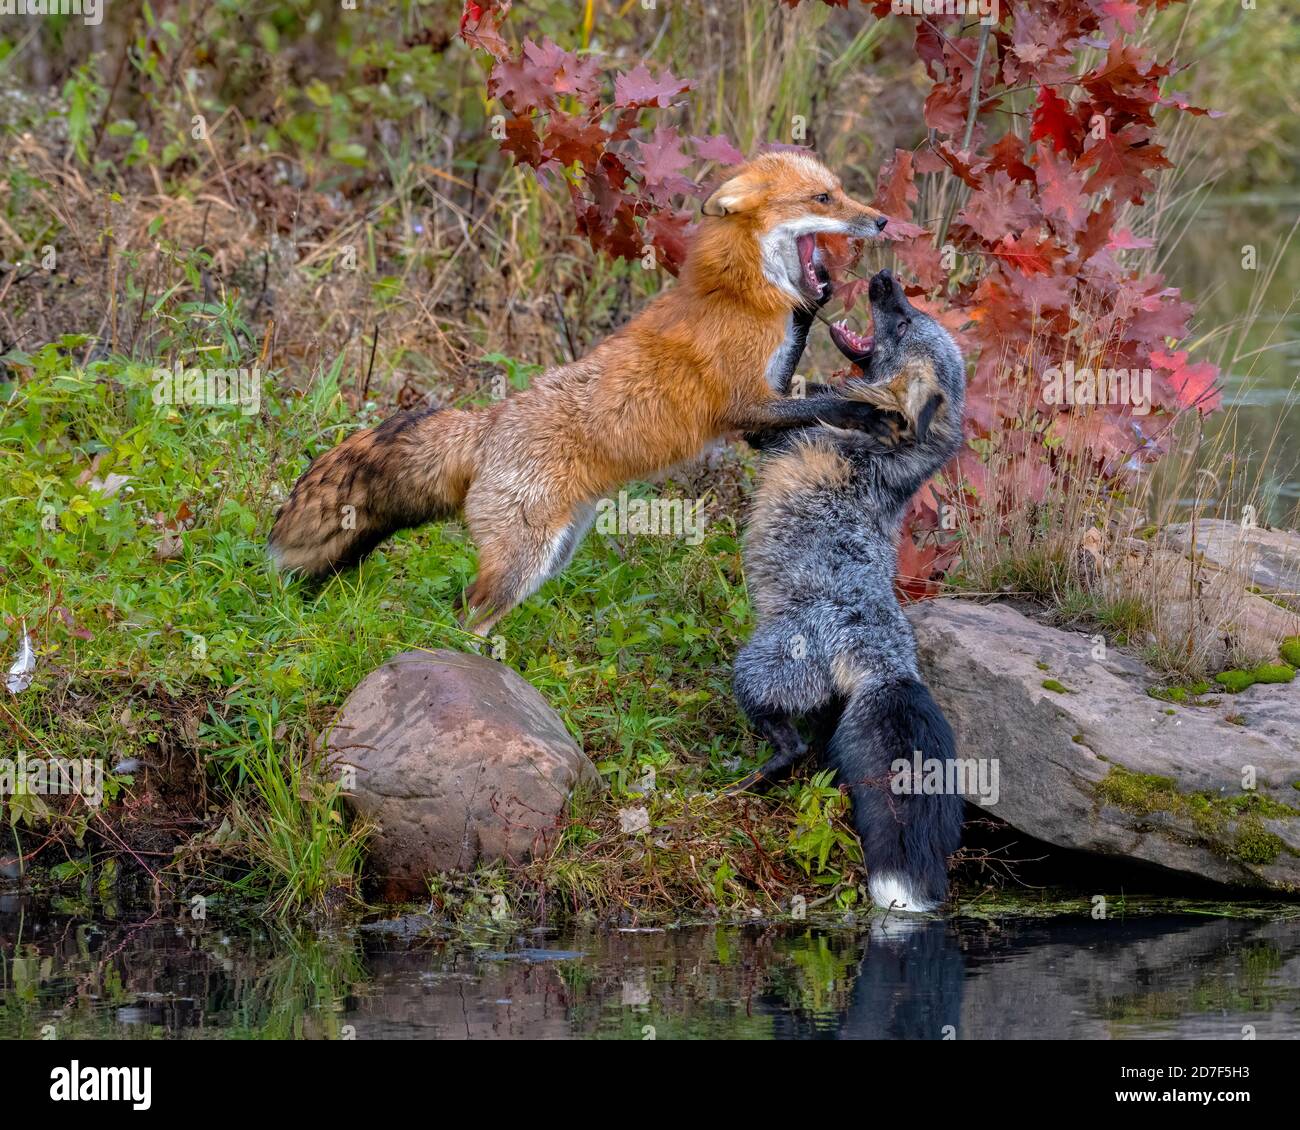 Red Fox and Cross Fox Fighting near Shoreline Stock Photo